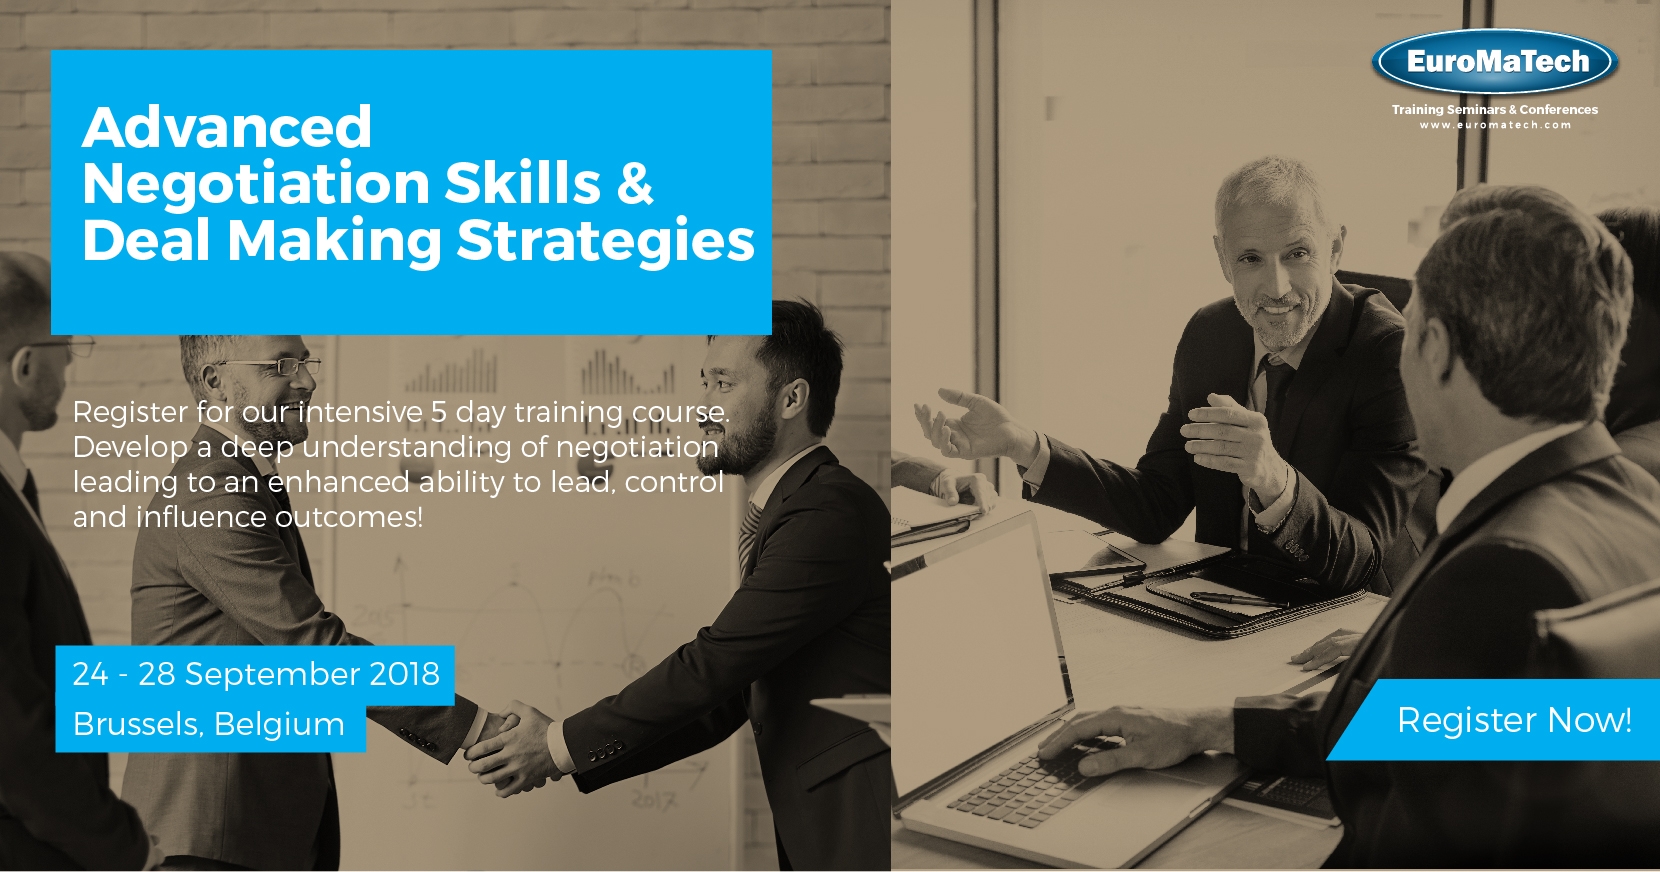 Advanced Negotiation Skills & Deal Making Strategies Training Course